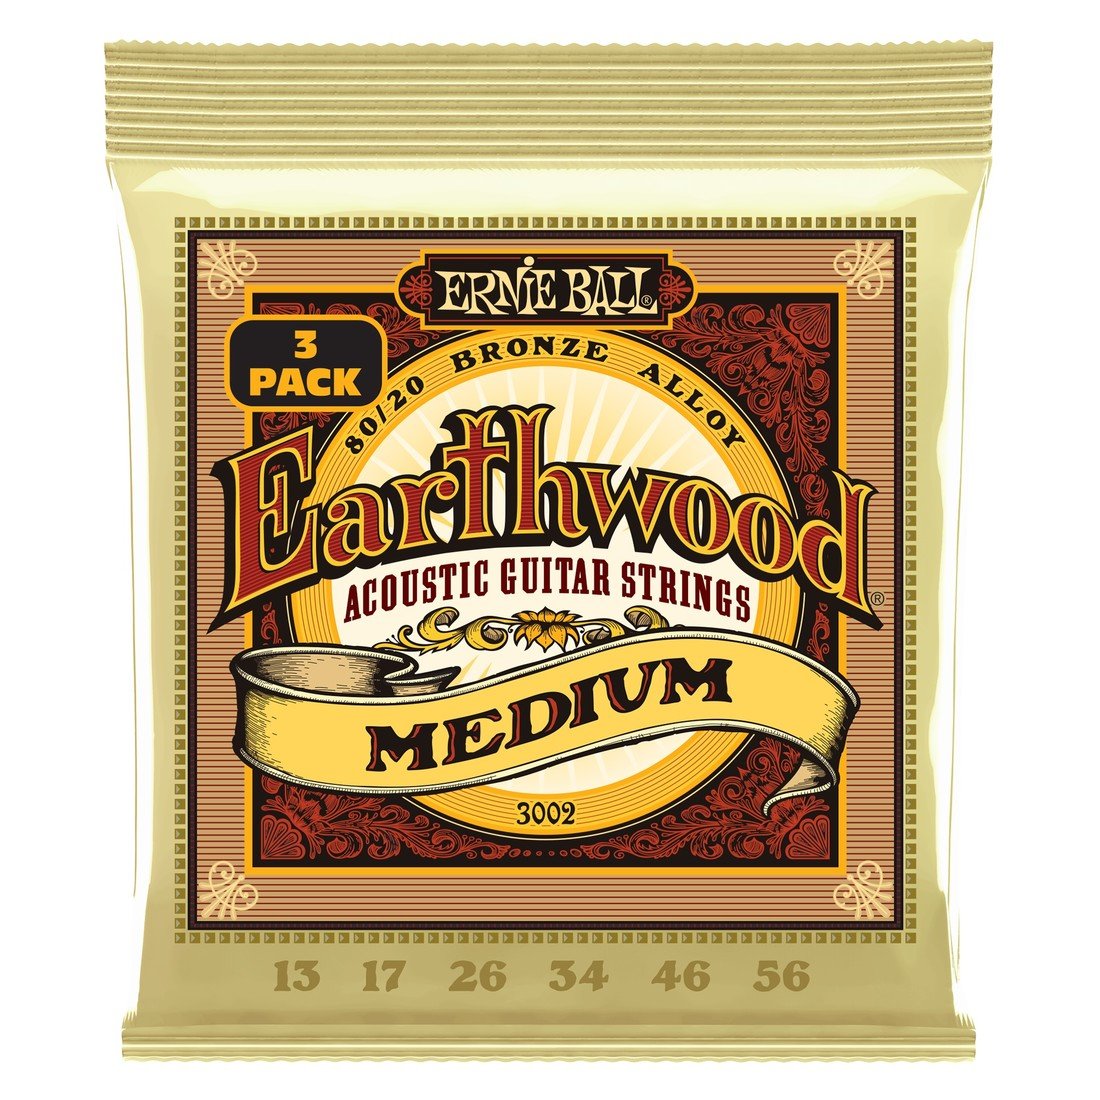 Ernie Ball Earthwood Medium 80/20 Bronze 3-Pack